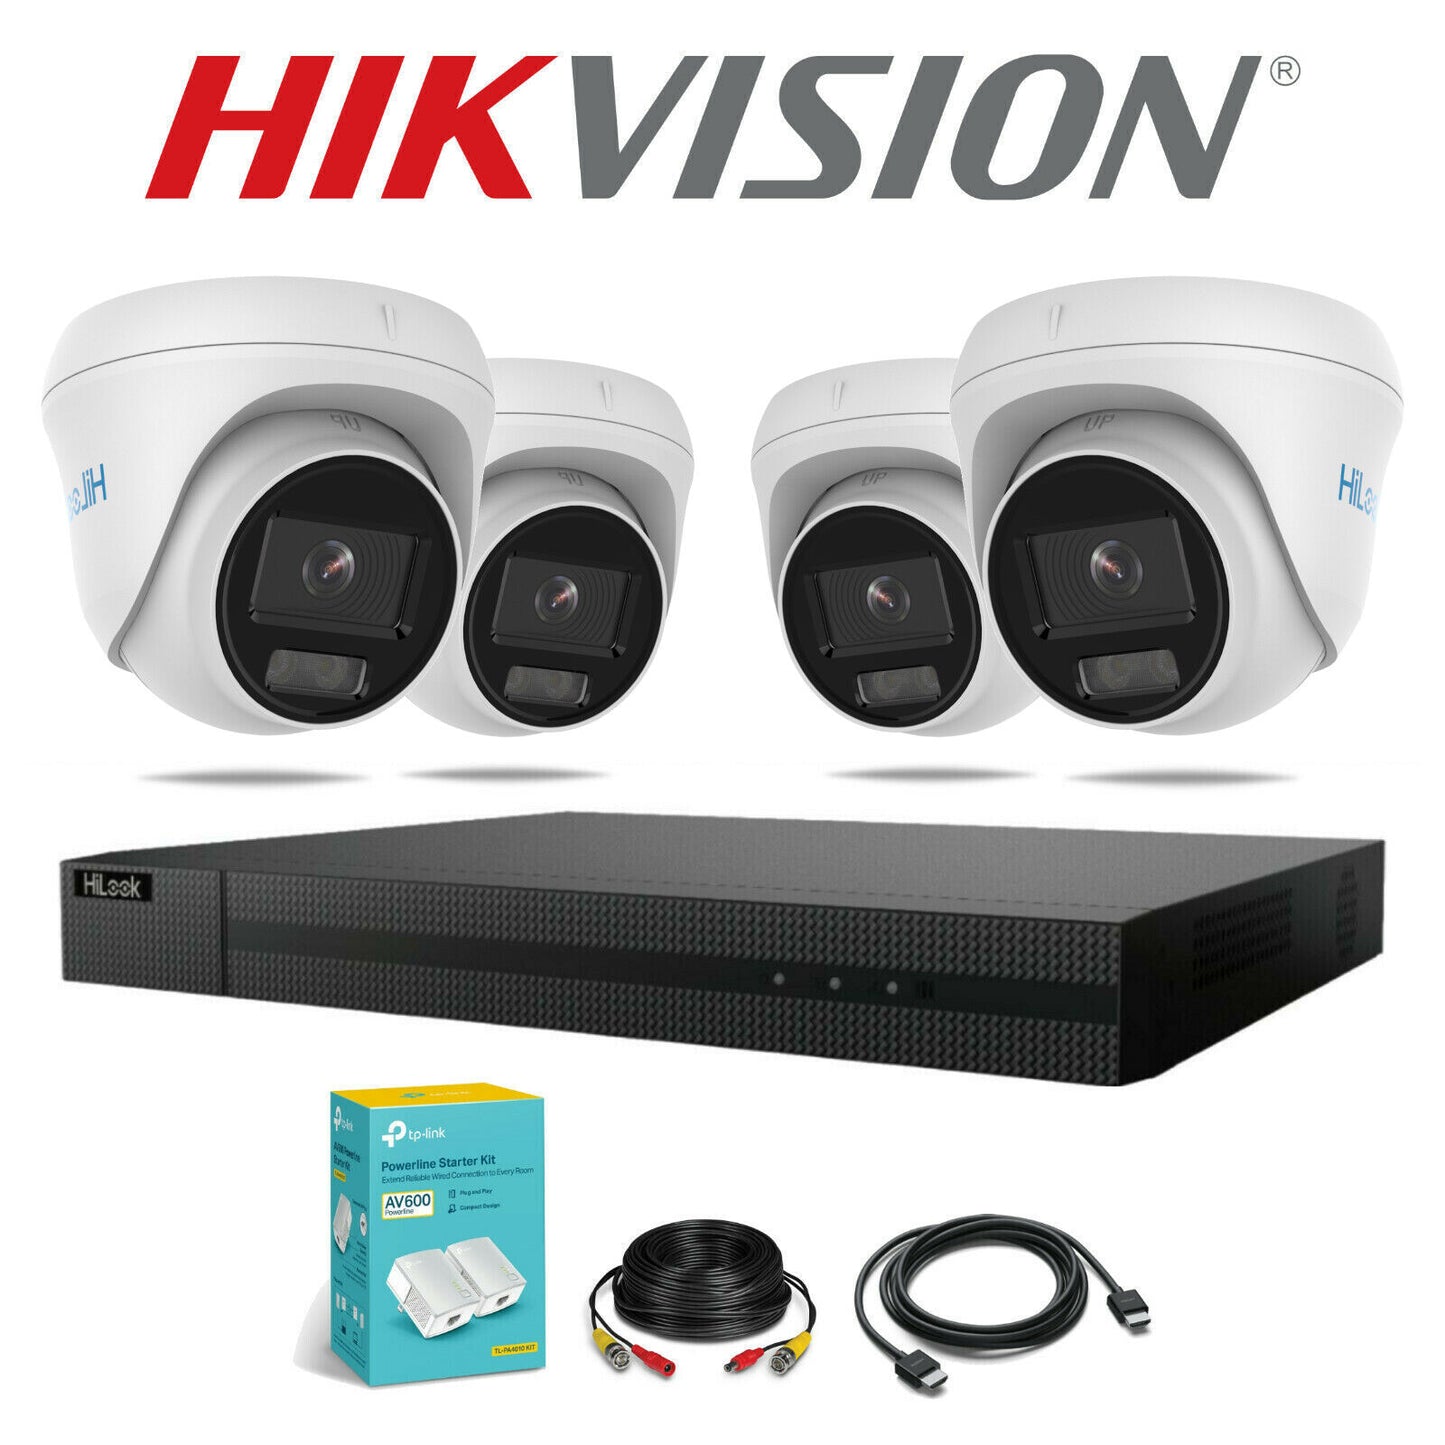 HIKVISION COLORVU POE CCTV SYSTEM IP UHD 8MP NVR 4K 5MP 24/7 COLORVU CAMERA KIT 4CH NVR 4x Cameras 6TB HDD